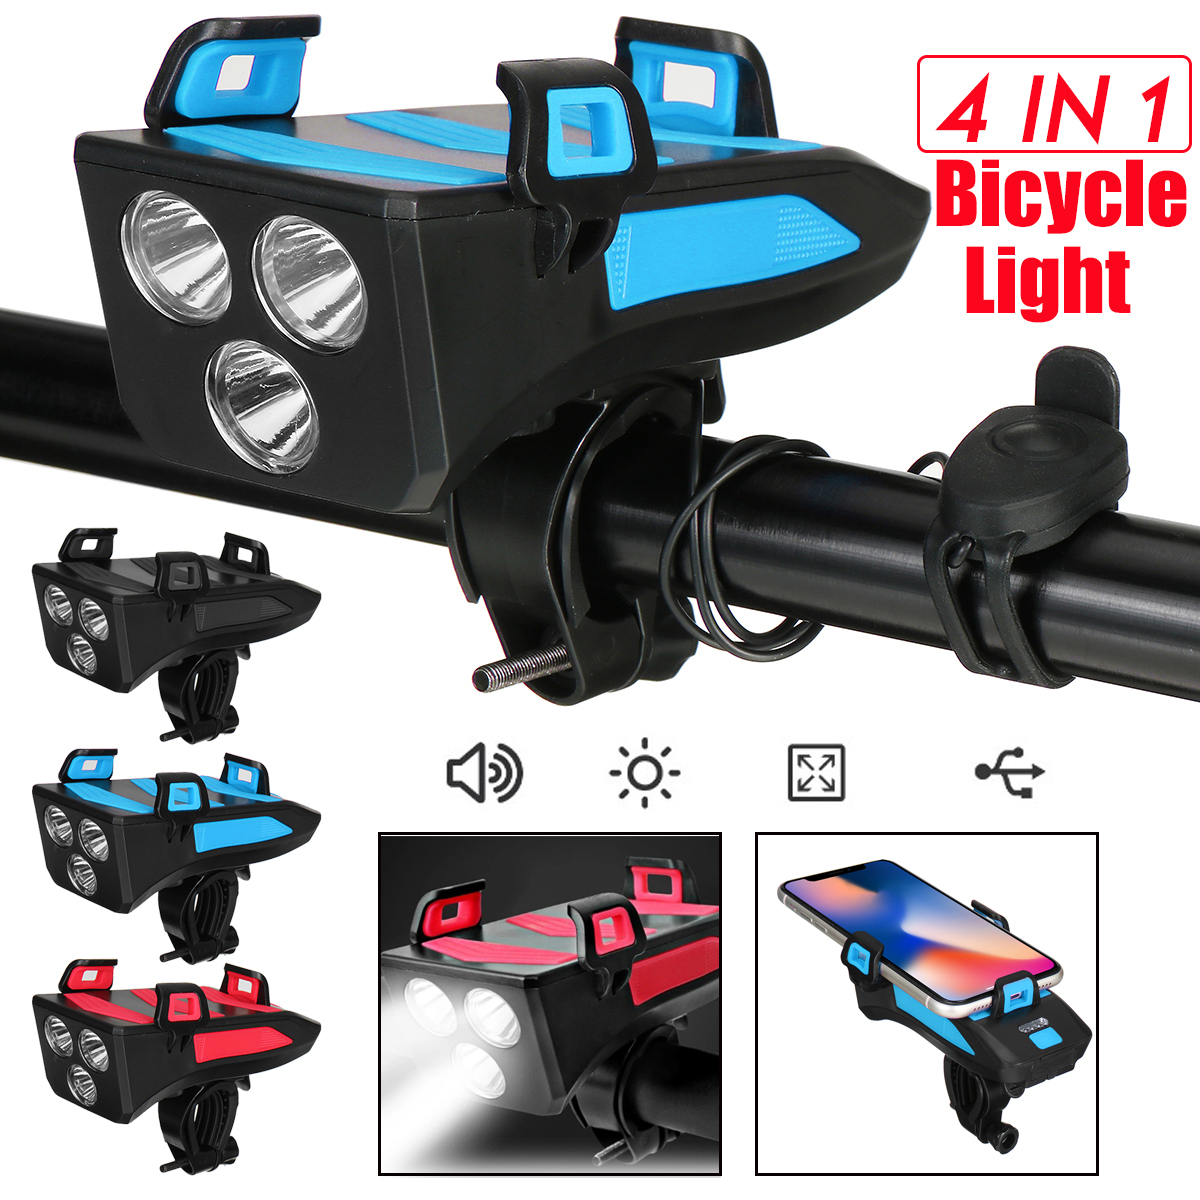 4-in-1-Bike-Bicycle-Light-Waterproof-with-Bike-Horn-Phone-Holder-Power-Bank-1727338-1